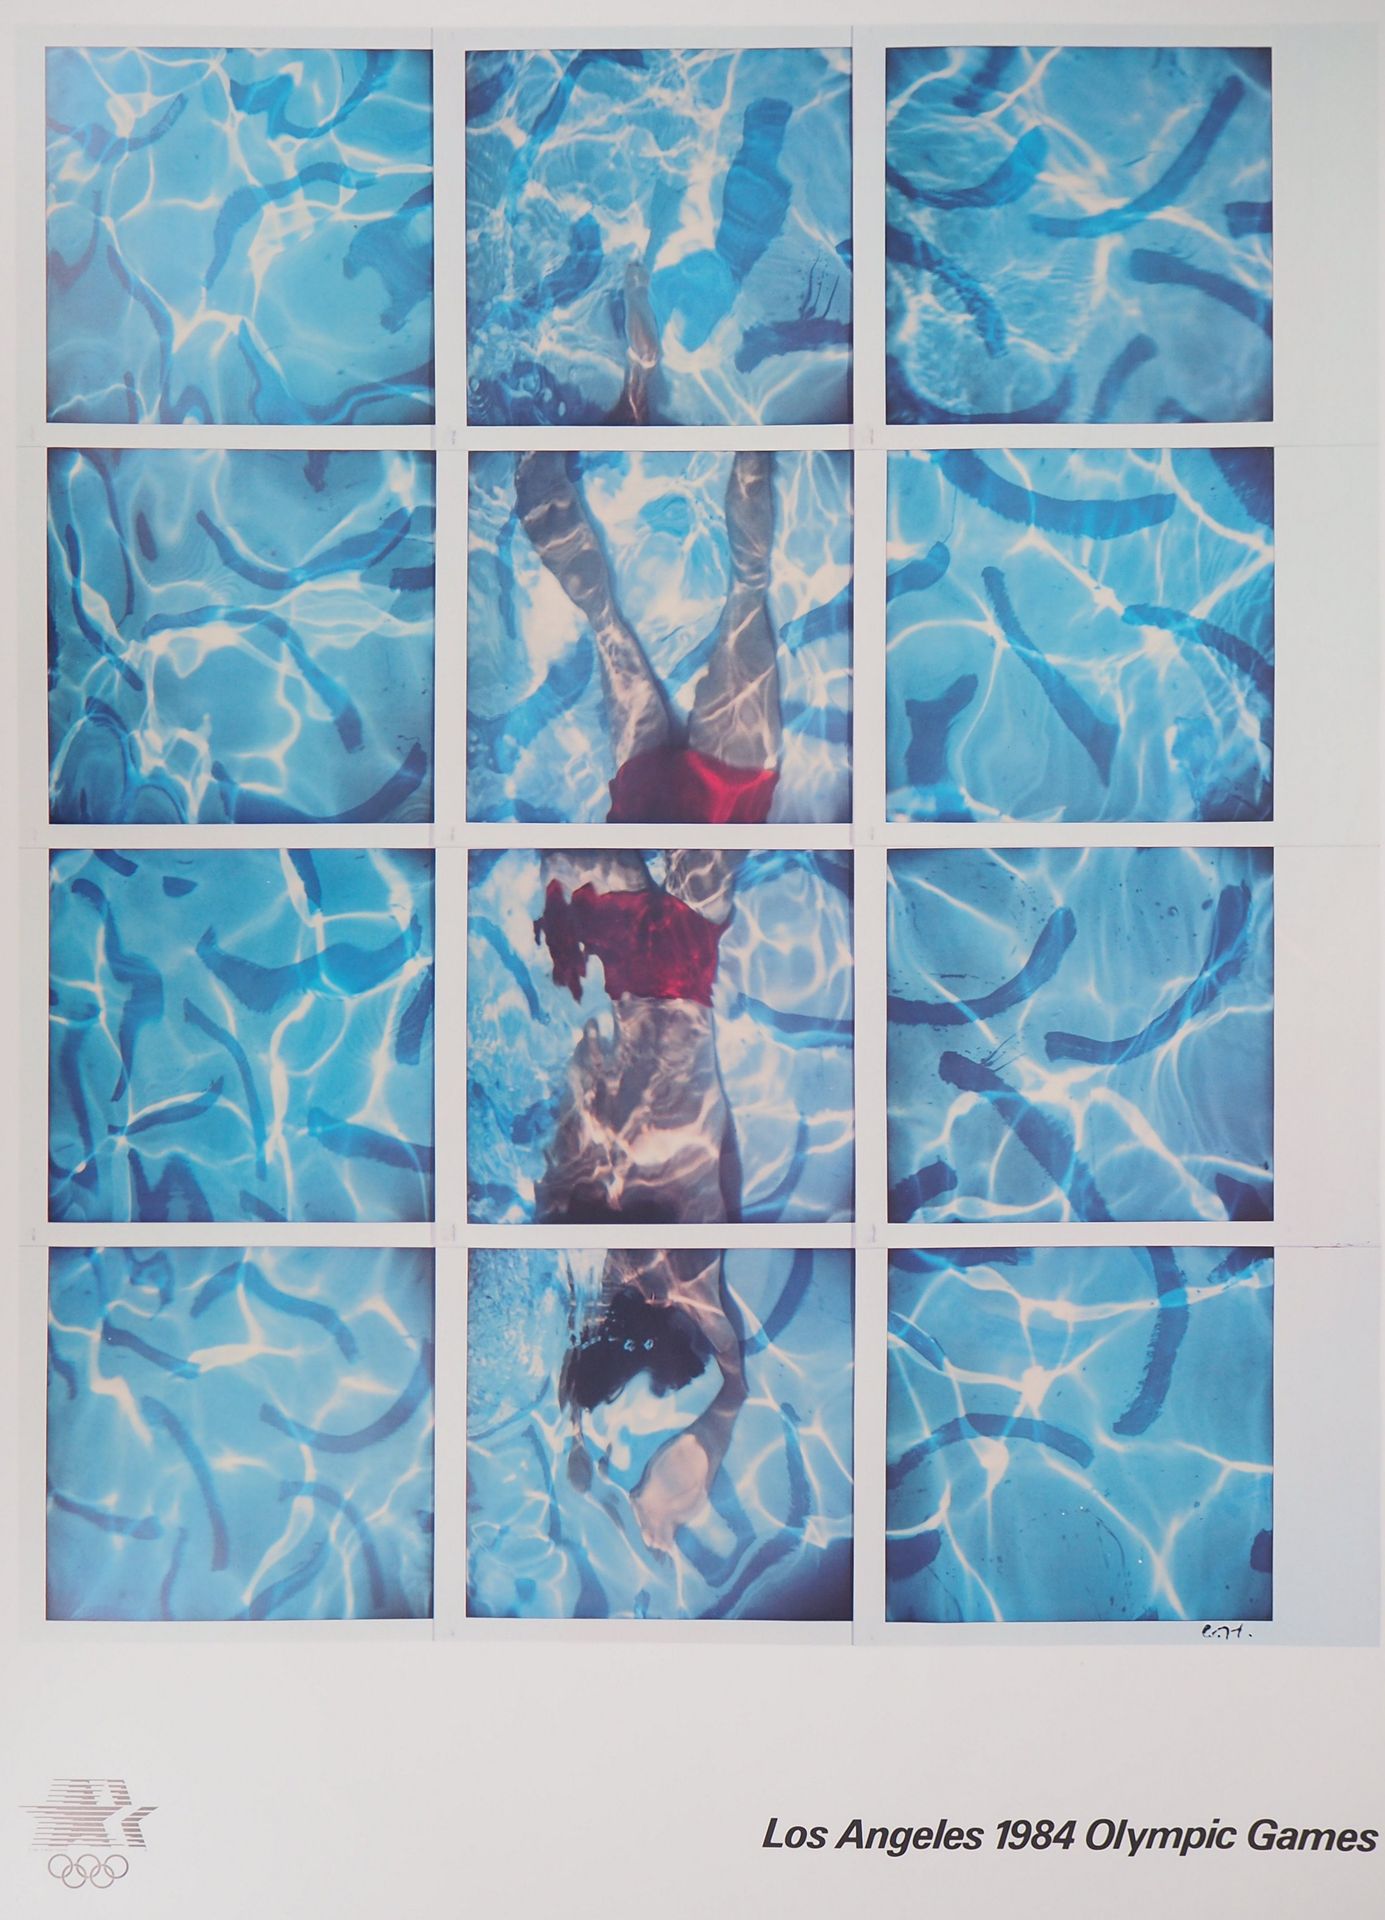 David HOCKNEY David HOCKNEY

Swimmer, Pool Diver, 1982

Offsetdruck

In der Druc&hellip;